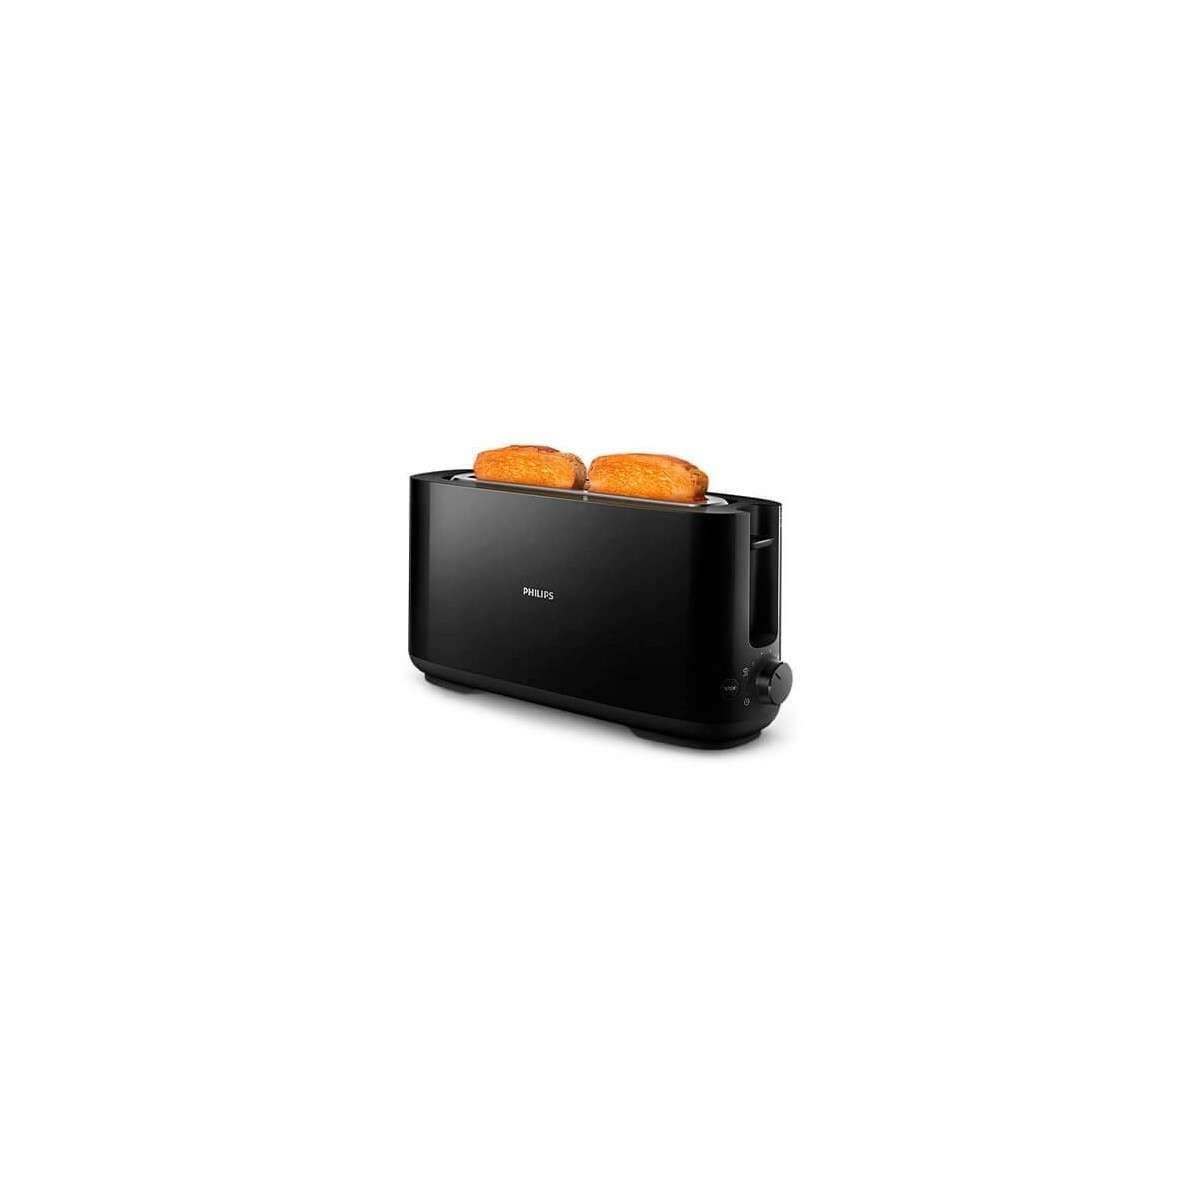 Tostadora - Philips HD2590/90, Capacidad para 2 tostadas, Negro, 8